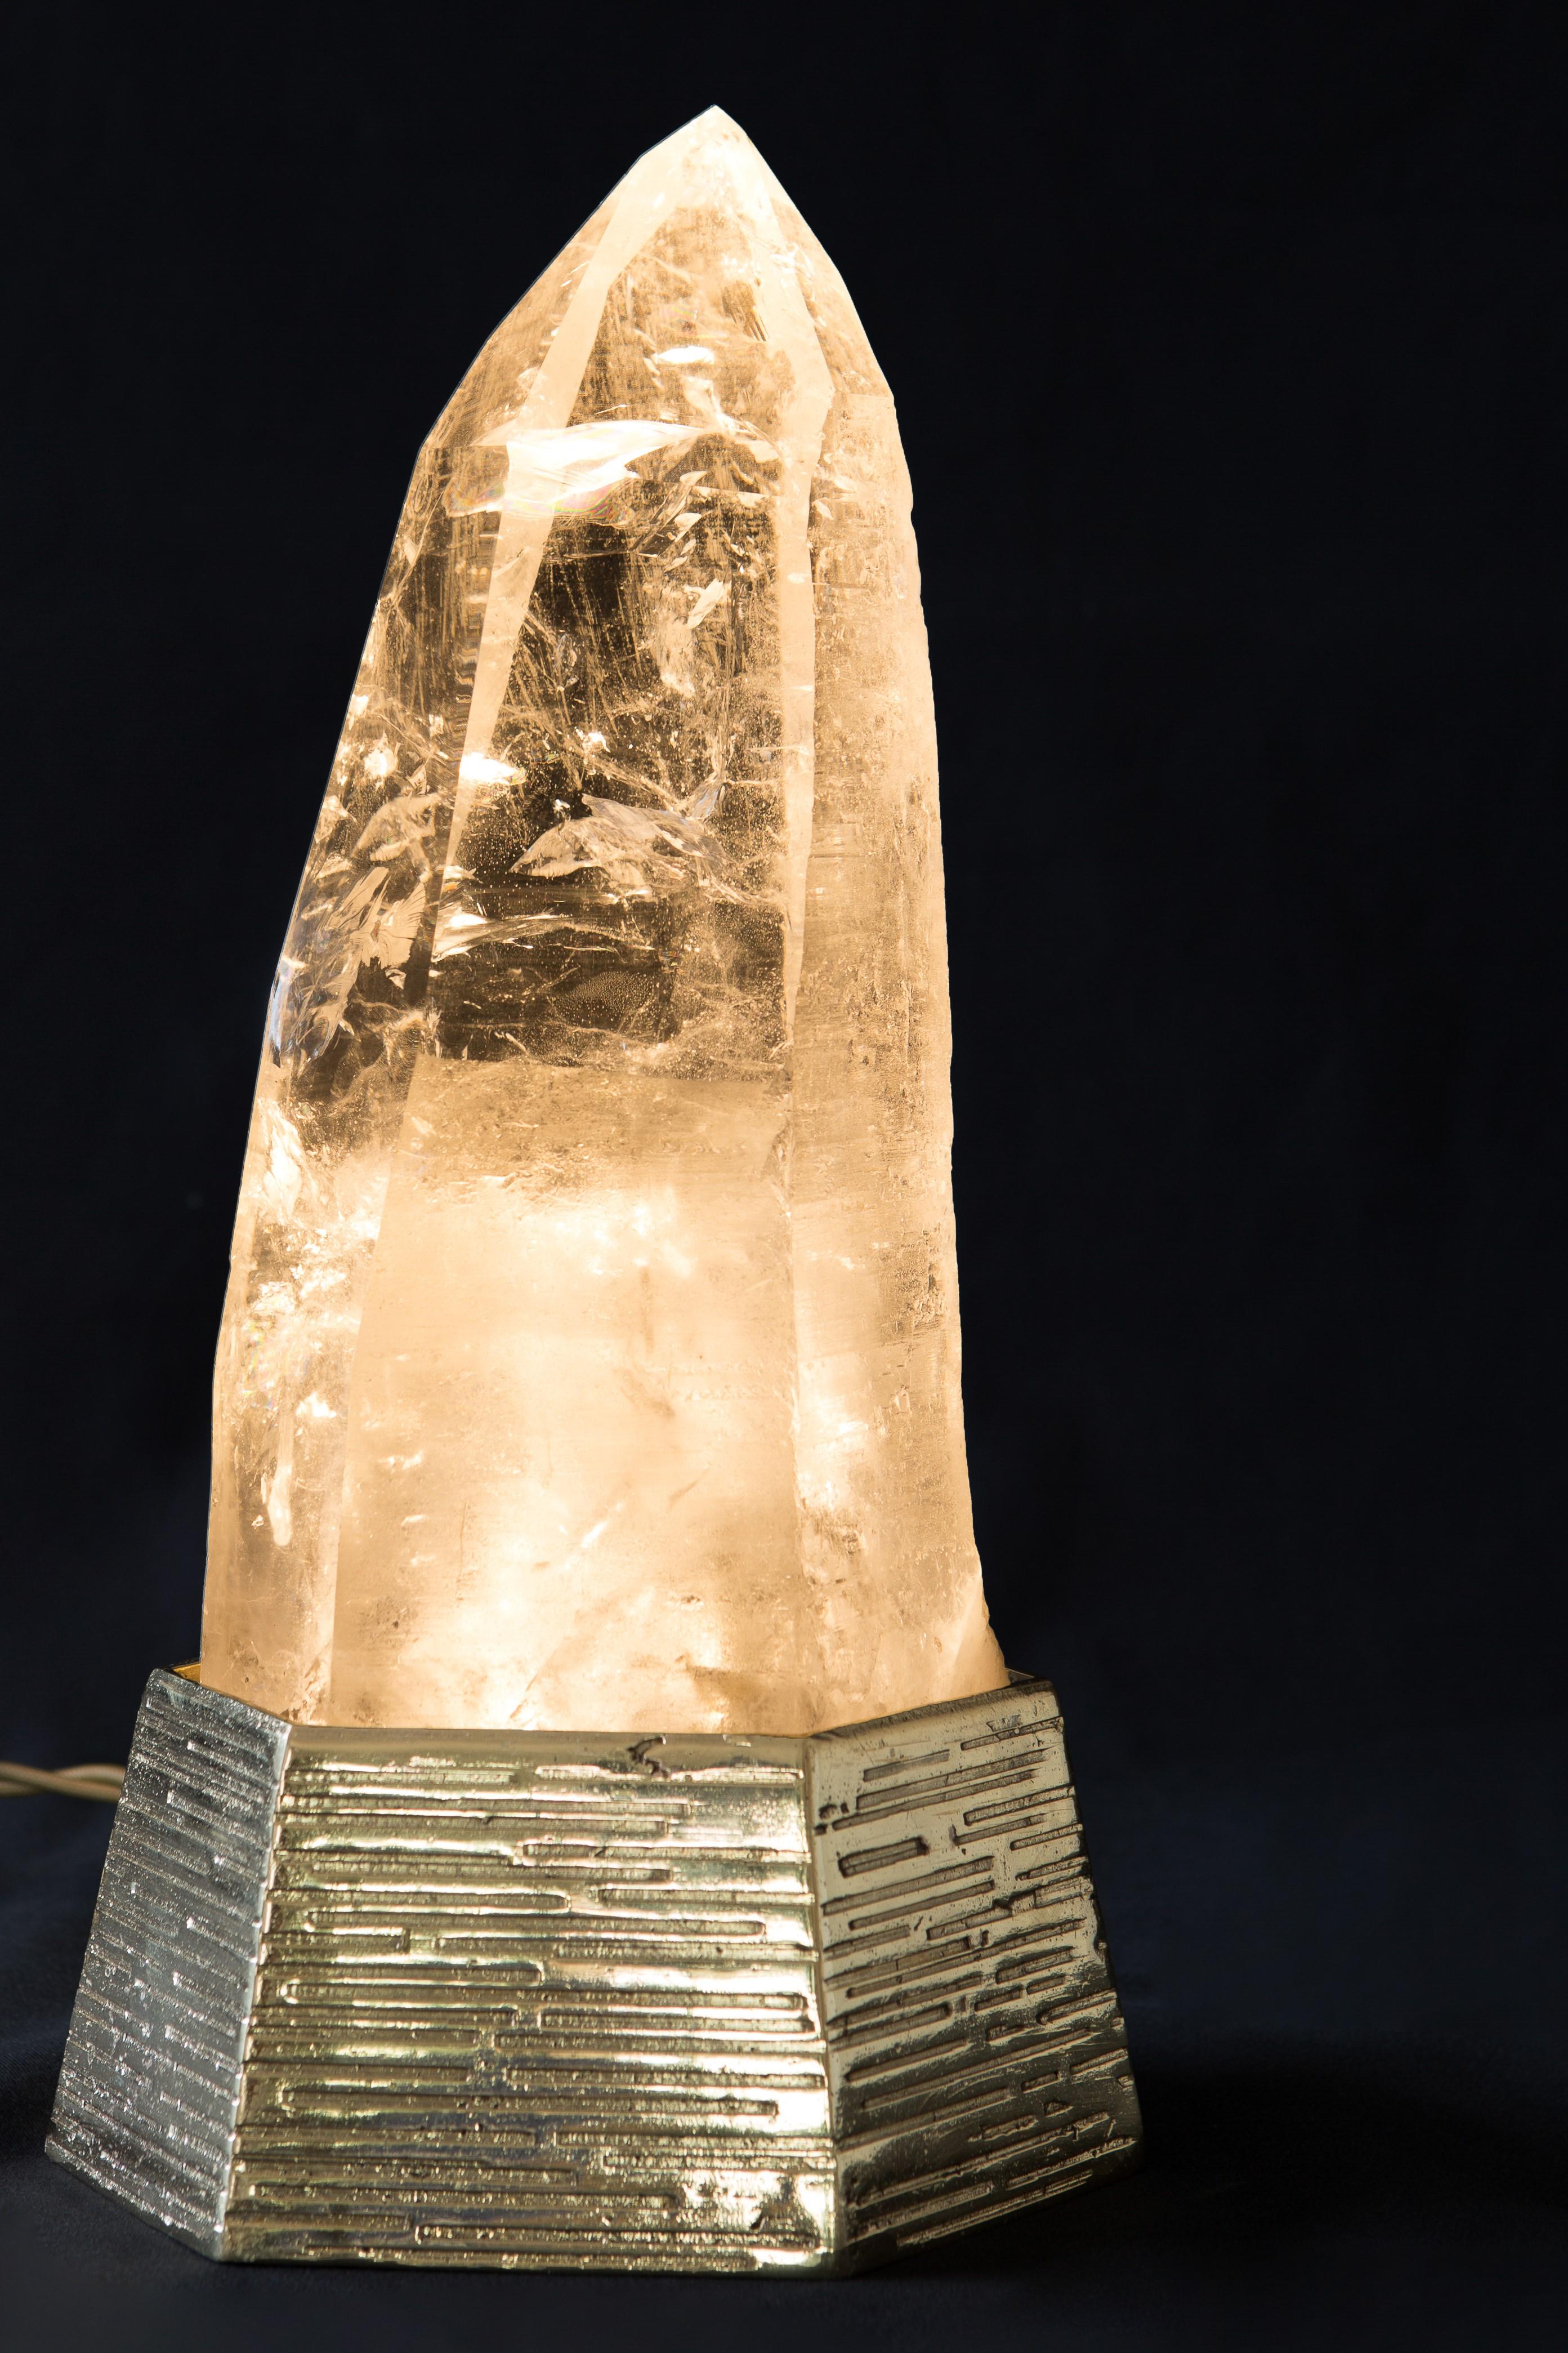 Ela natural quartz table lamp by Demian Quincke
Dimensions: Diameter 13 x height 34 cm
Materials: Casted bronze base and extra natural quartz point

5W, GU-10 LED light inside, Bi-Volt 110/220 V
4.8 kg natural rock crystal point, 2 kg base,